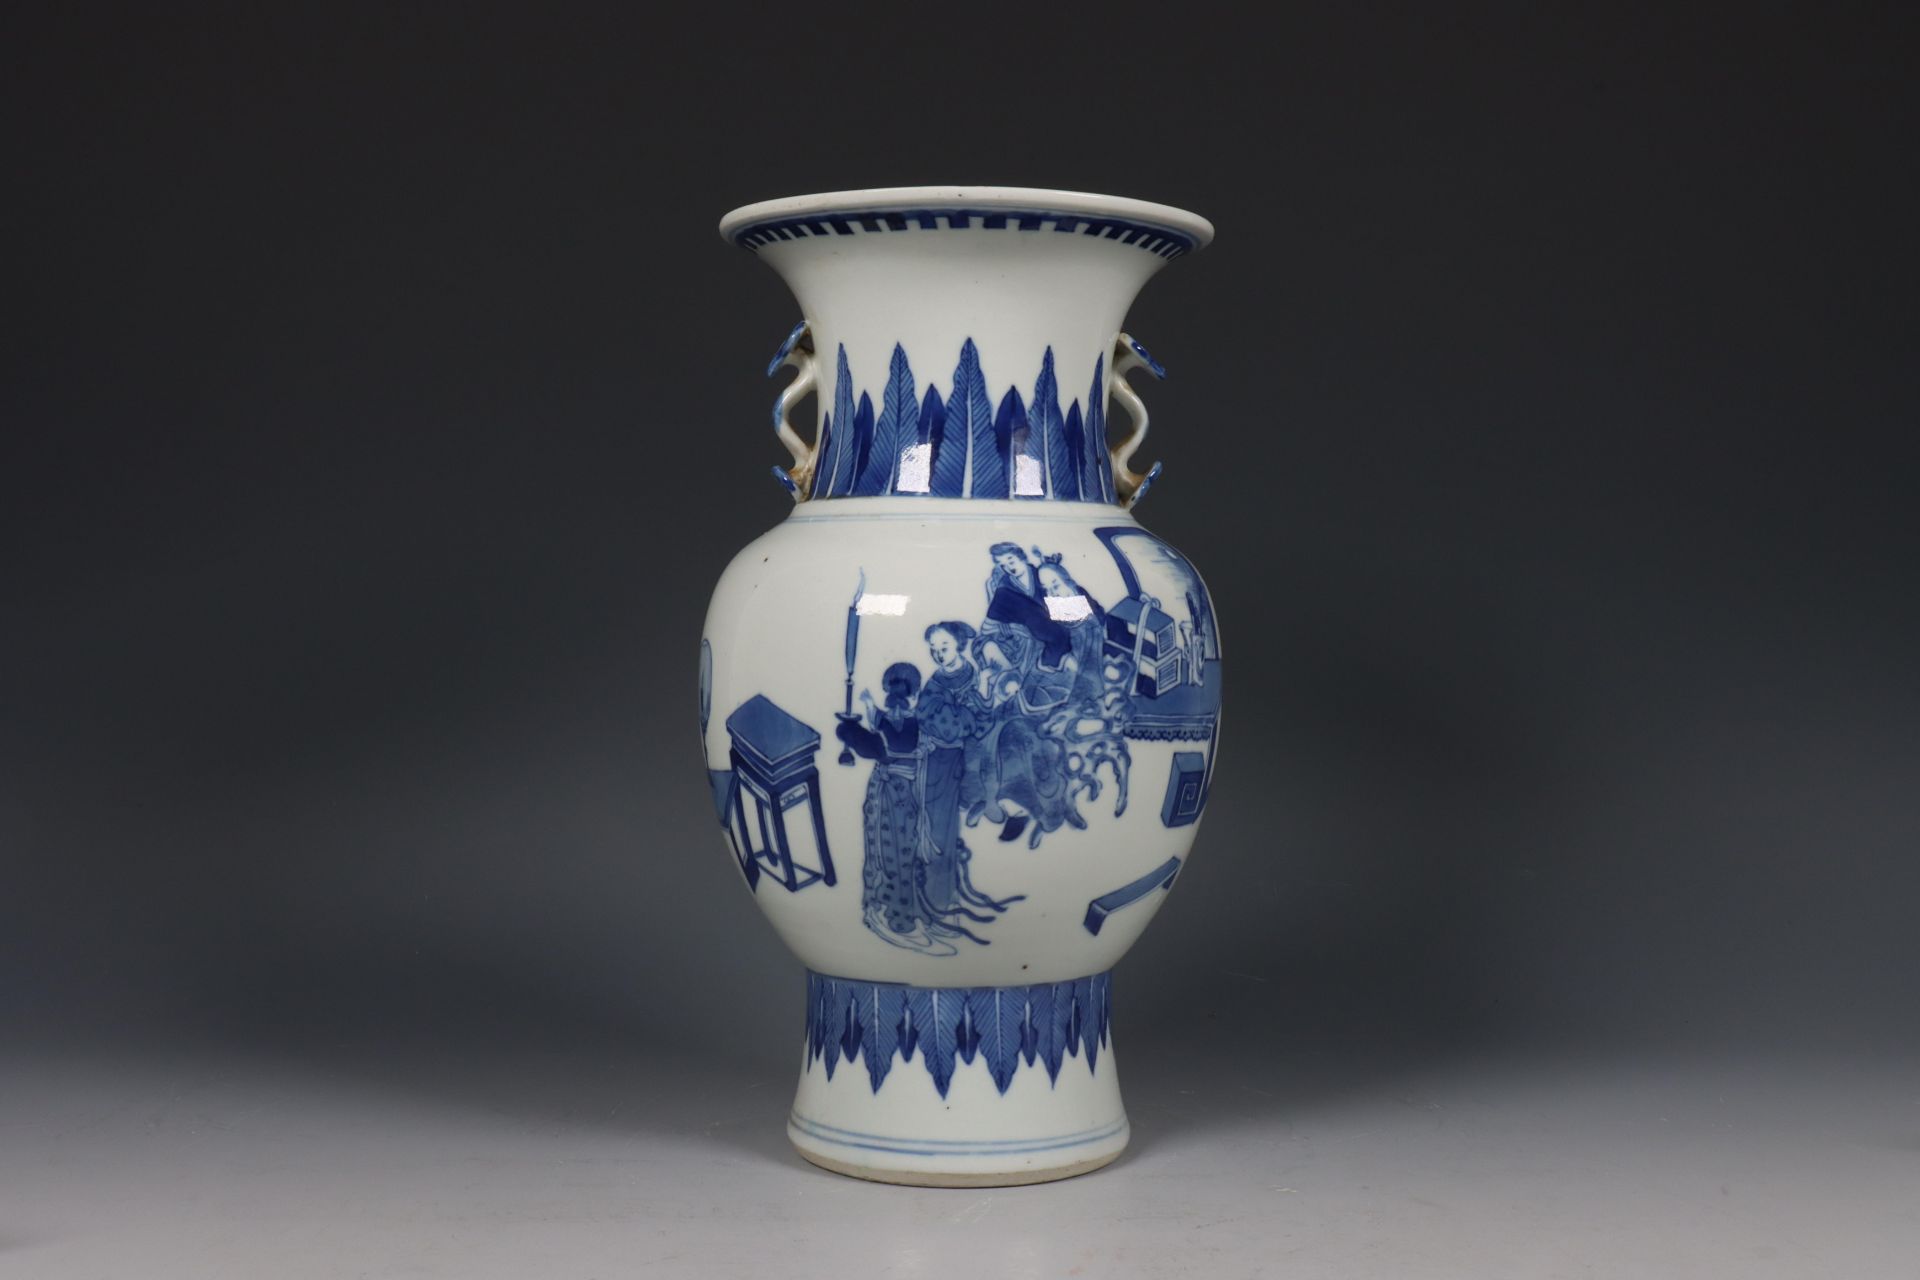 China, blauw-wit porseleinen vaas, 20e eeuw,